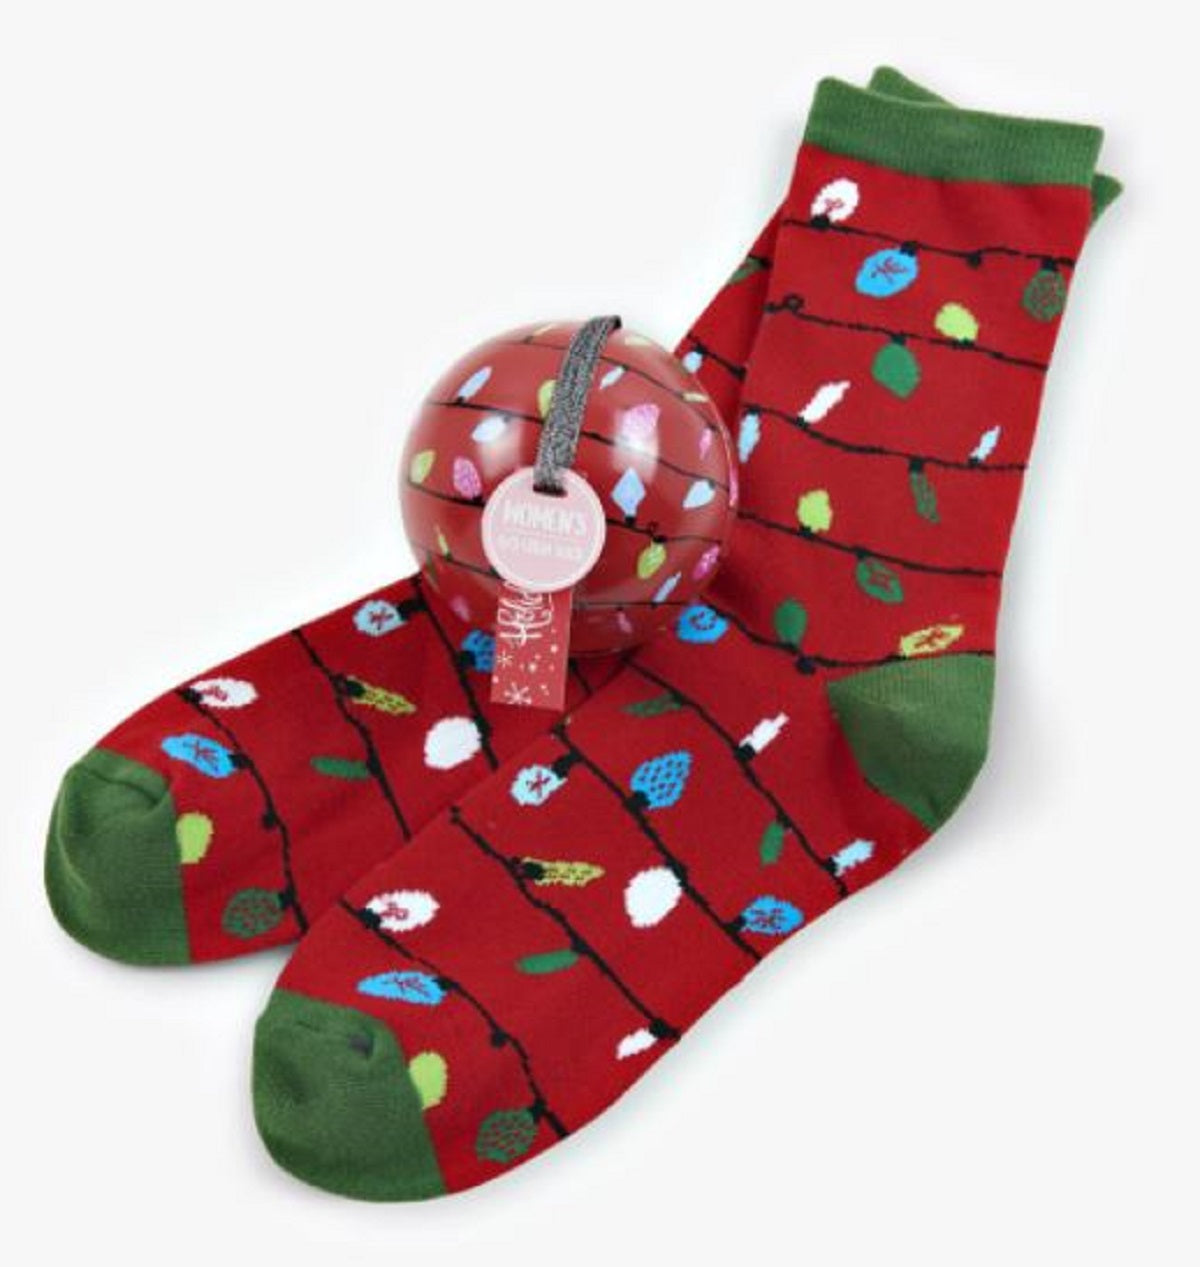 Hatley Christmas Socks in Ornament Kids